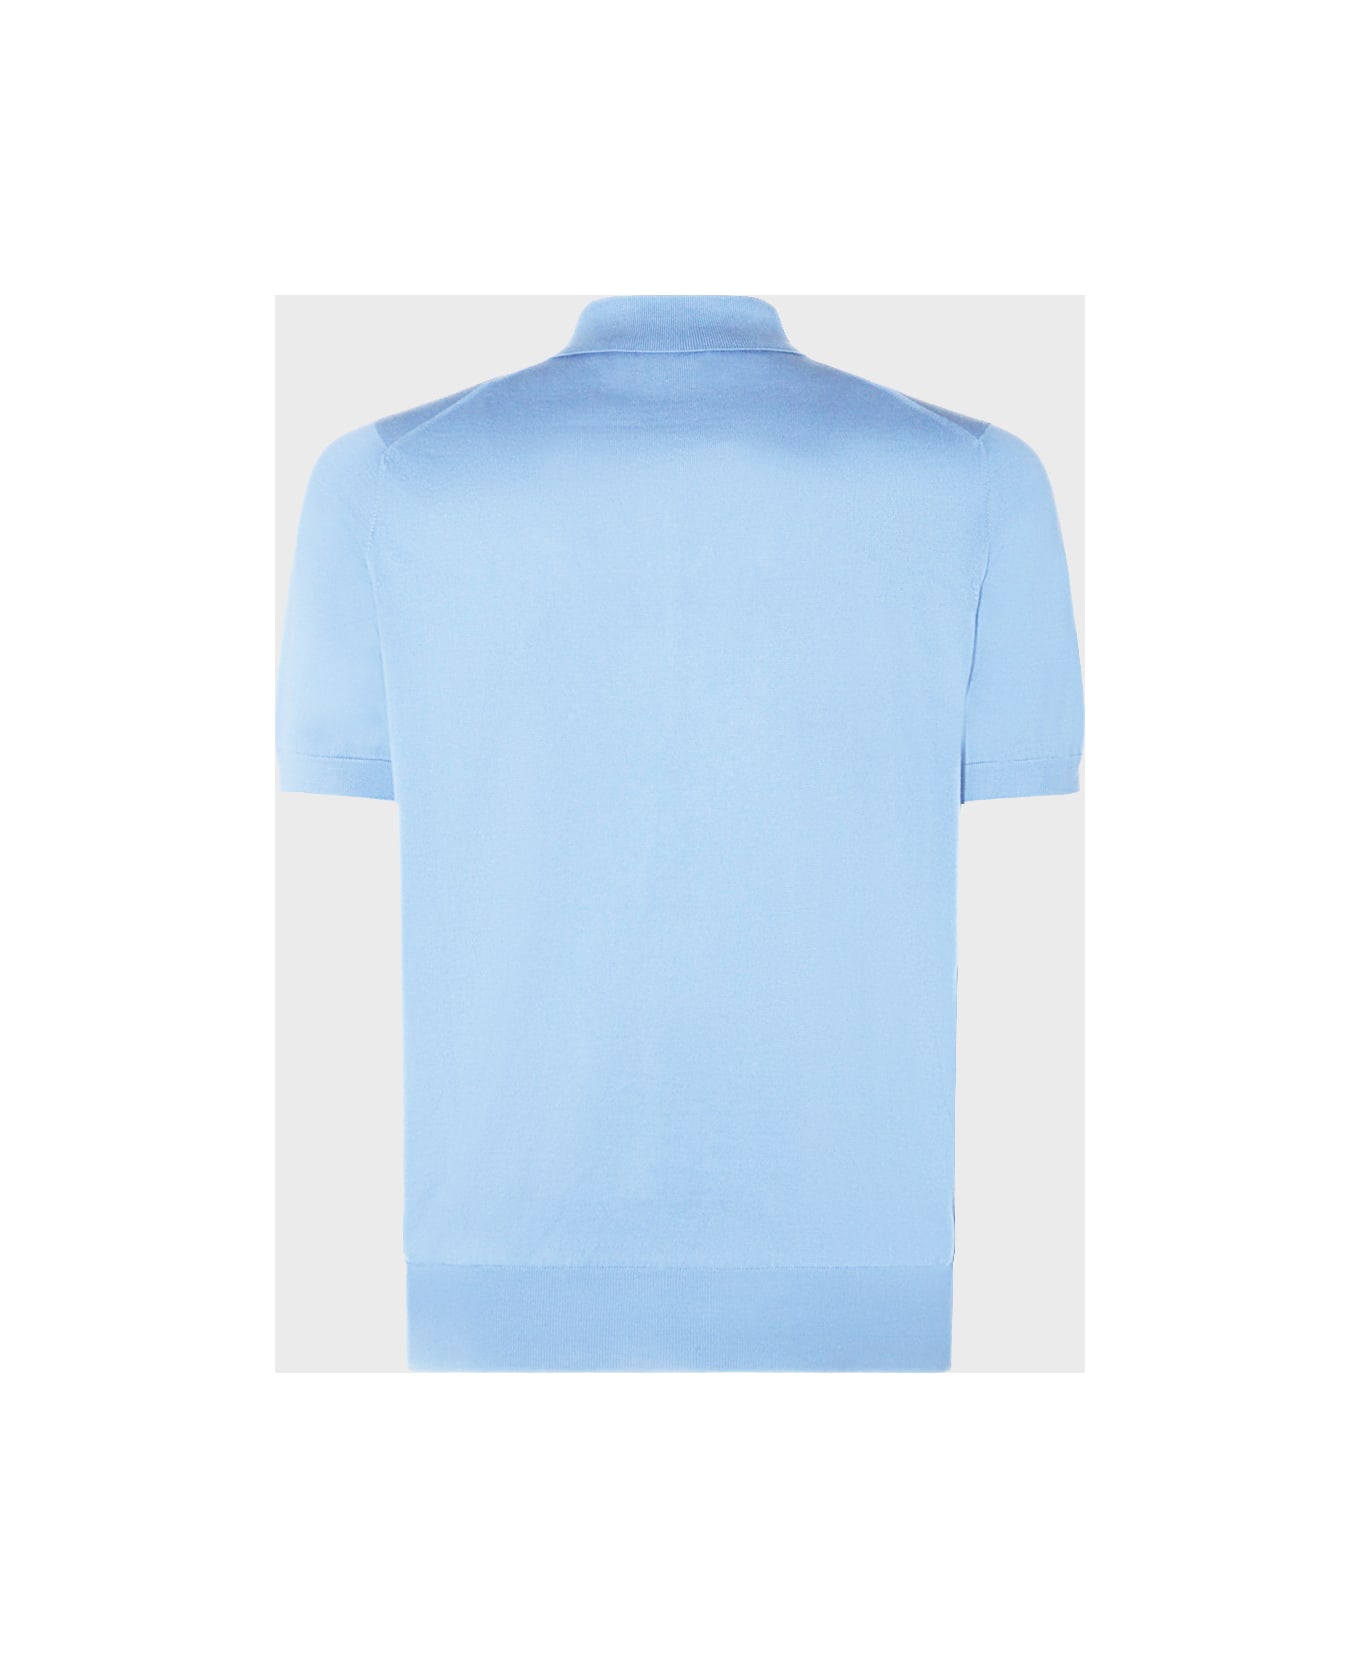 Brunello Cucinelli Light Blue Cotton Polo Bear Shirt - Turchese